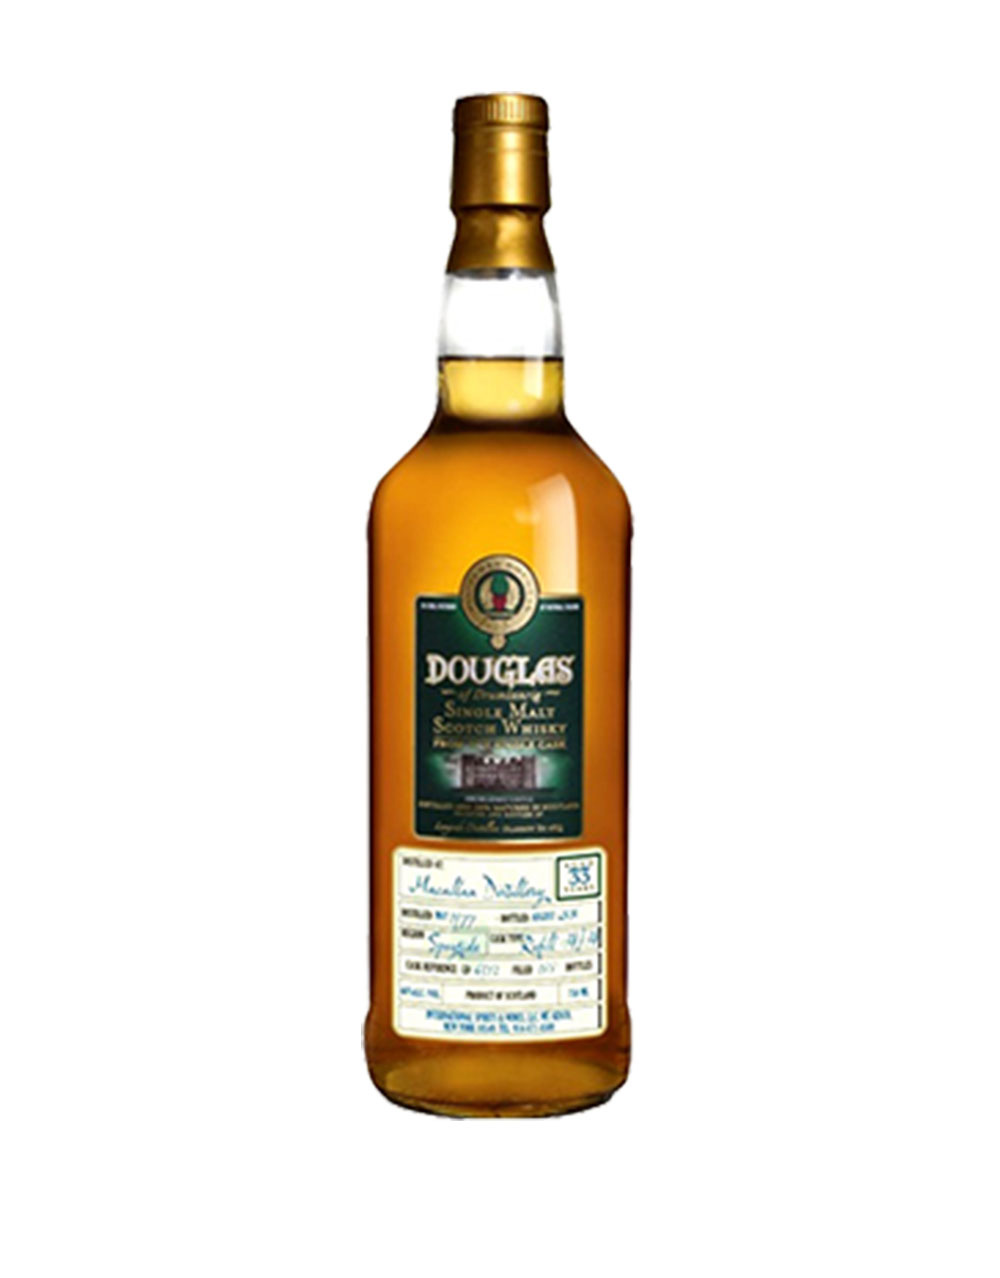 The Macallan 33 Year Old Single Malt Scotch Whisky (Douglas Laing Bottling)